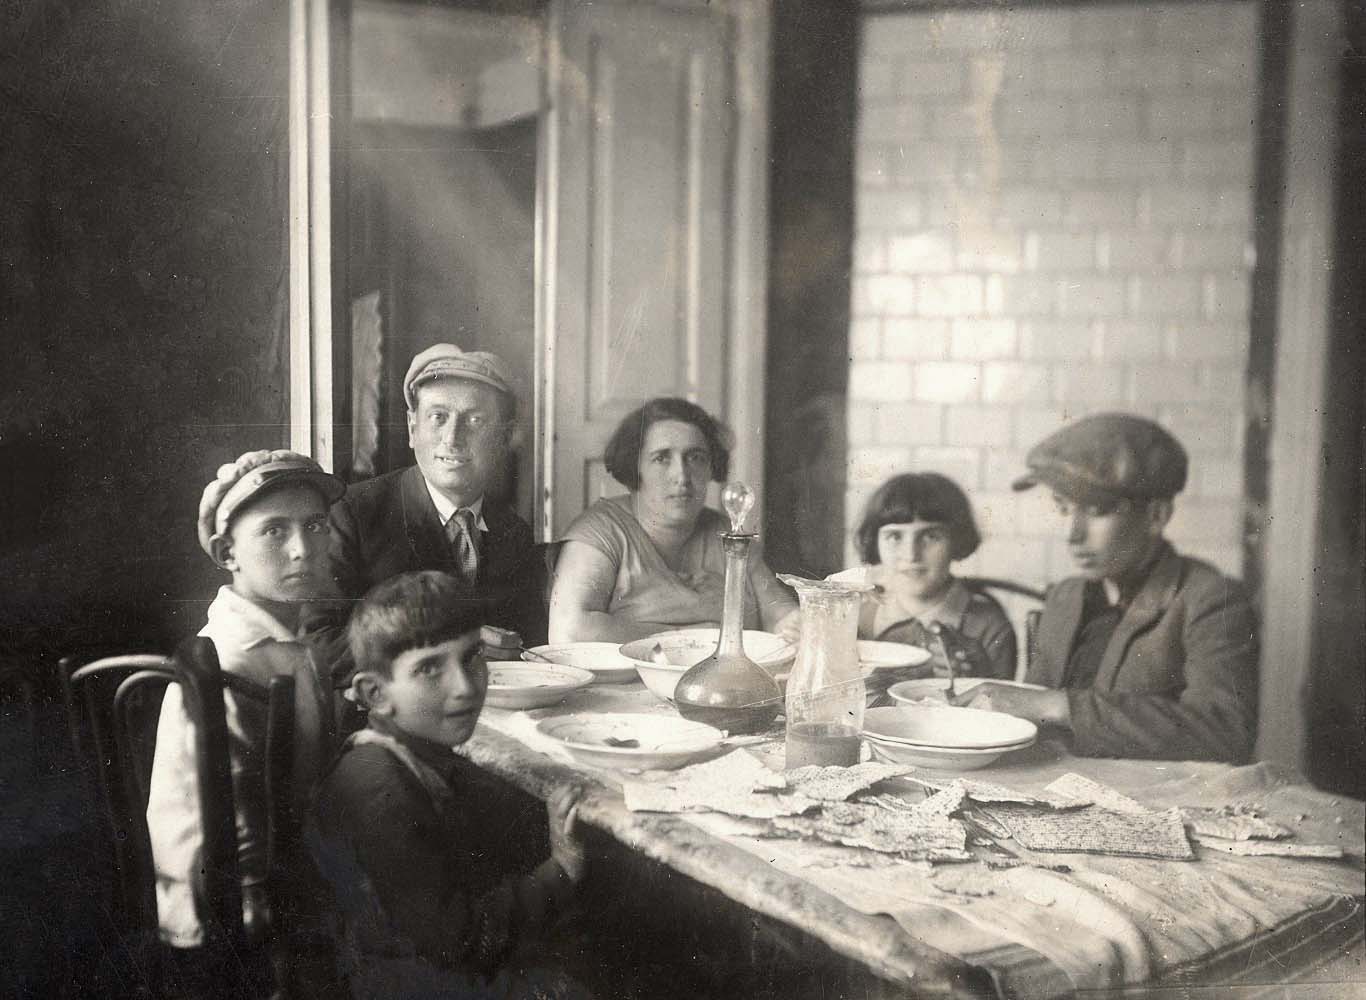 Rachel and Yitzhak Gachtmann's family on Passover, Janov, Poland, Prewar